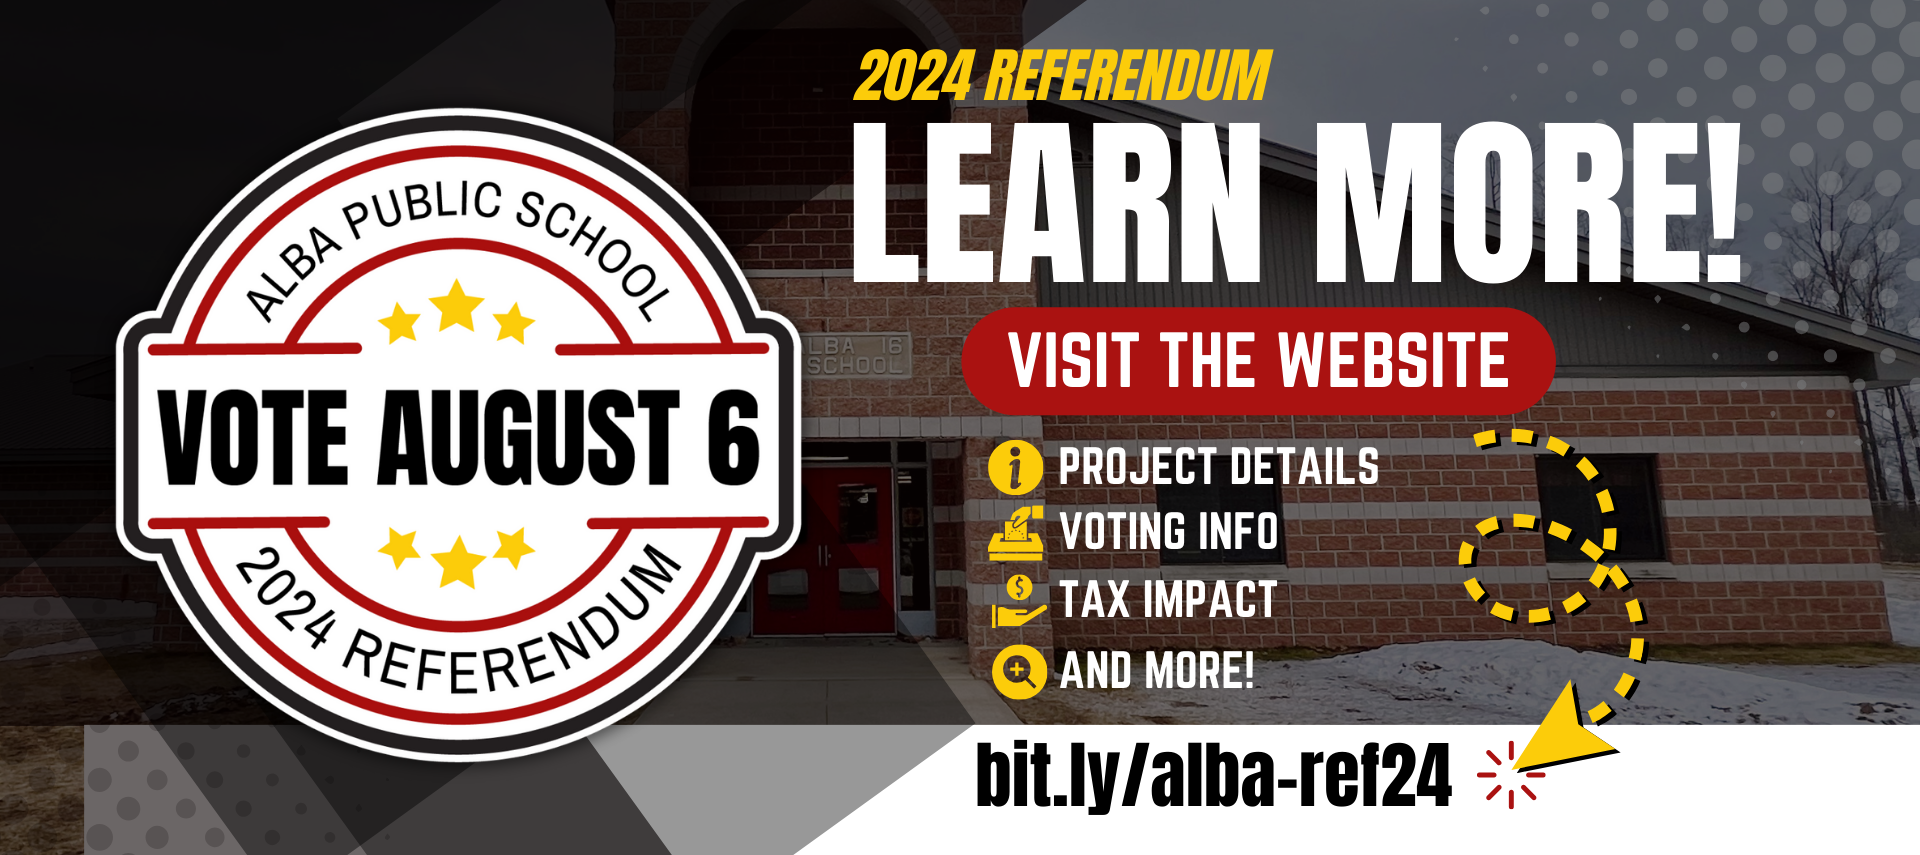 Alba referendum website header